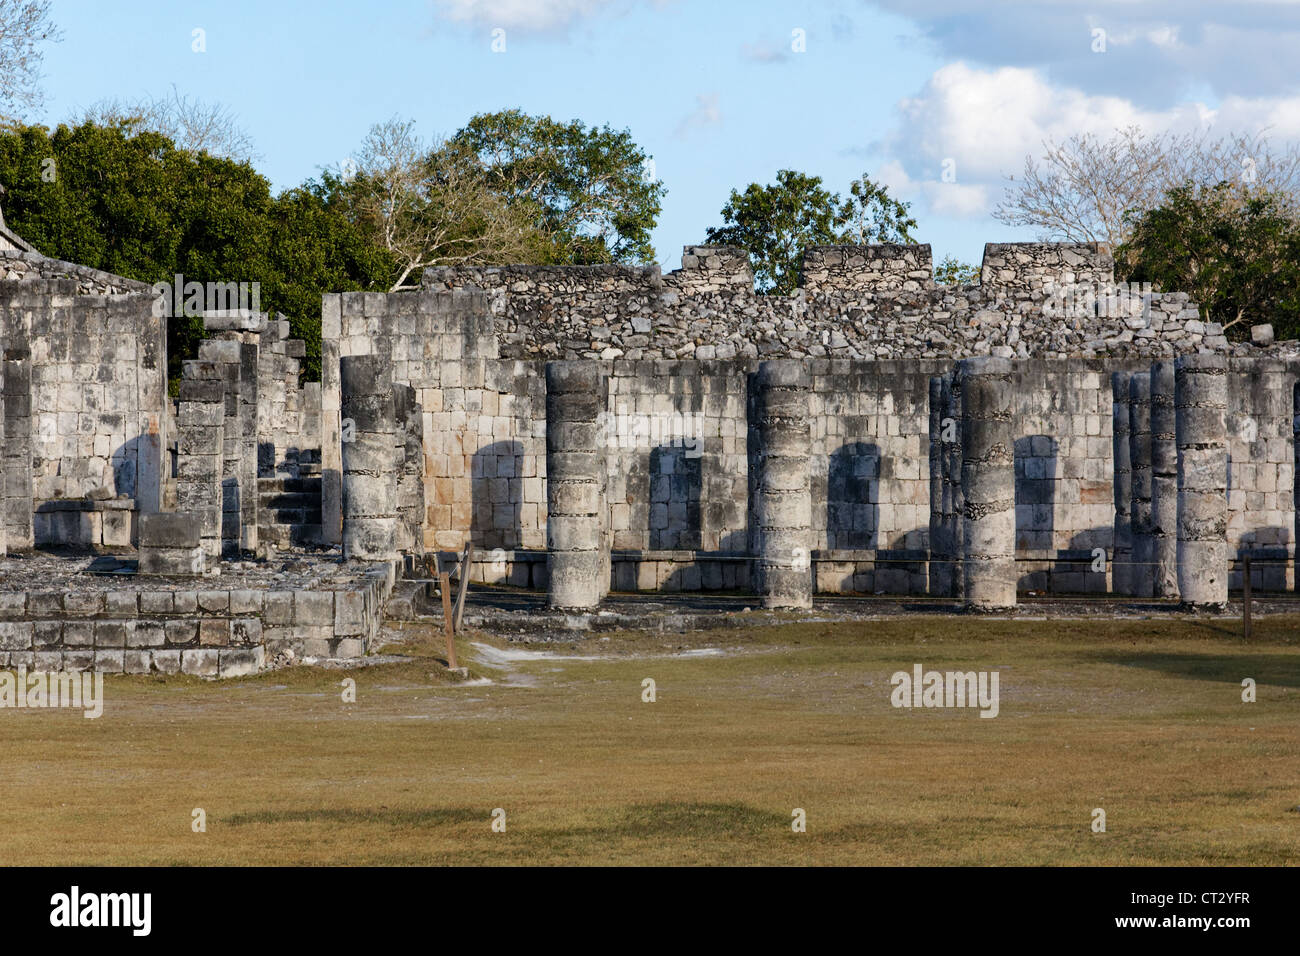 Ruined colonnades in the Mayan city of Chichen Itza, Yucatan, Mexico. Stock Photo